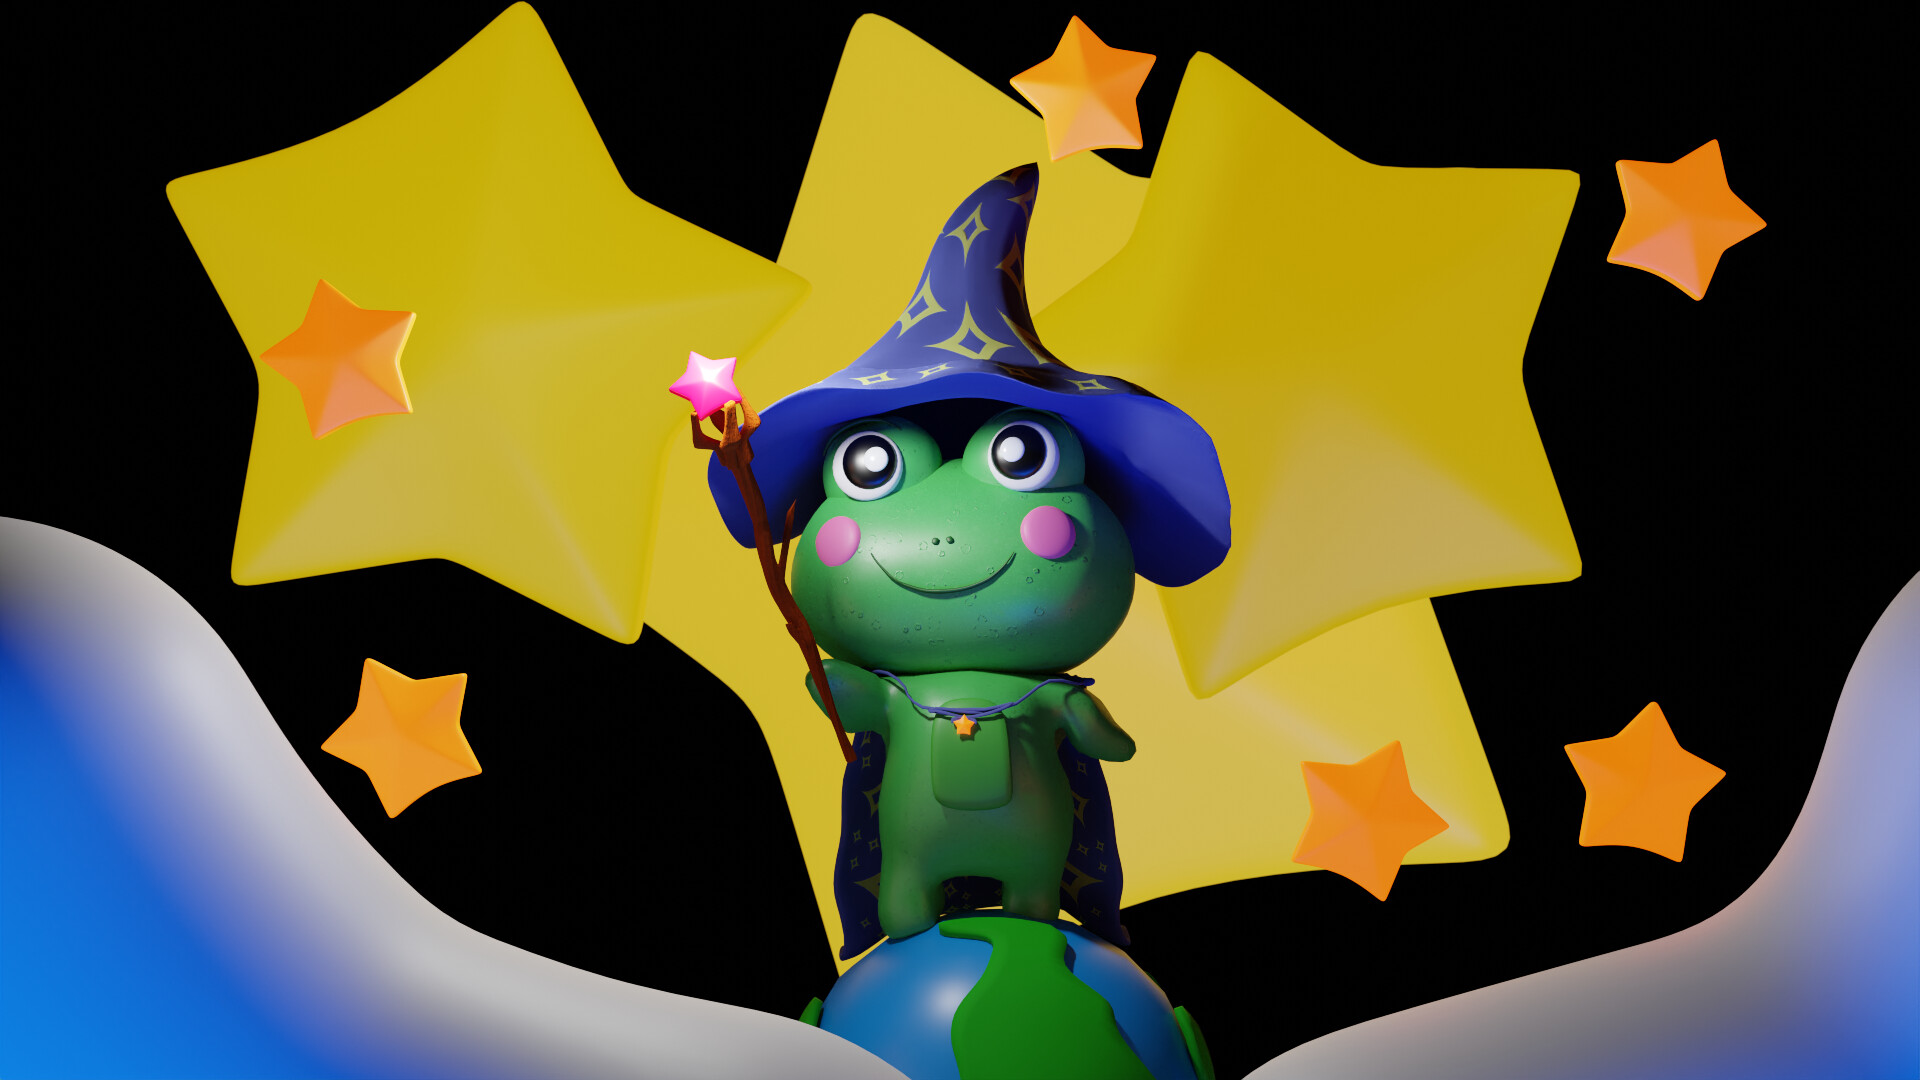 ArtStation - Froggie the Frog Wizard